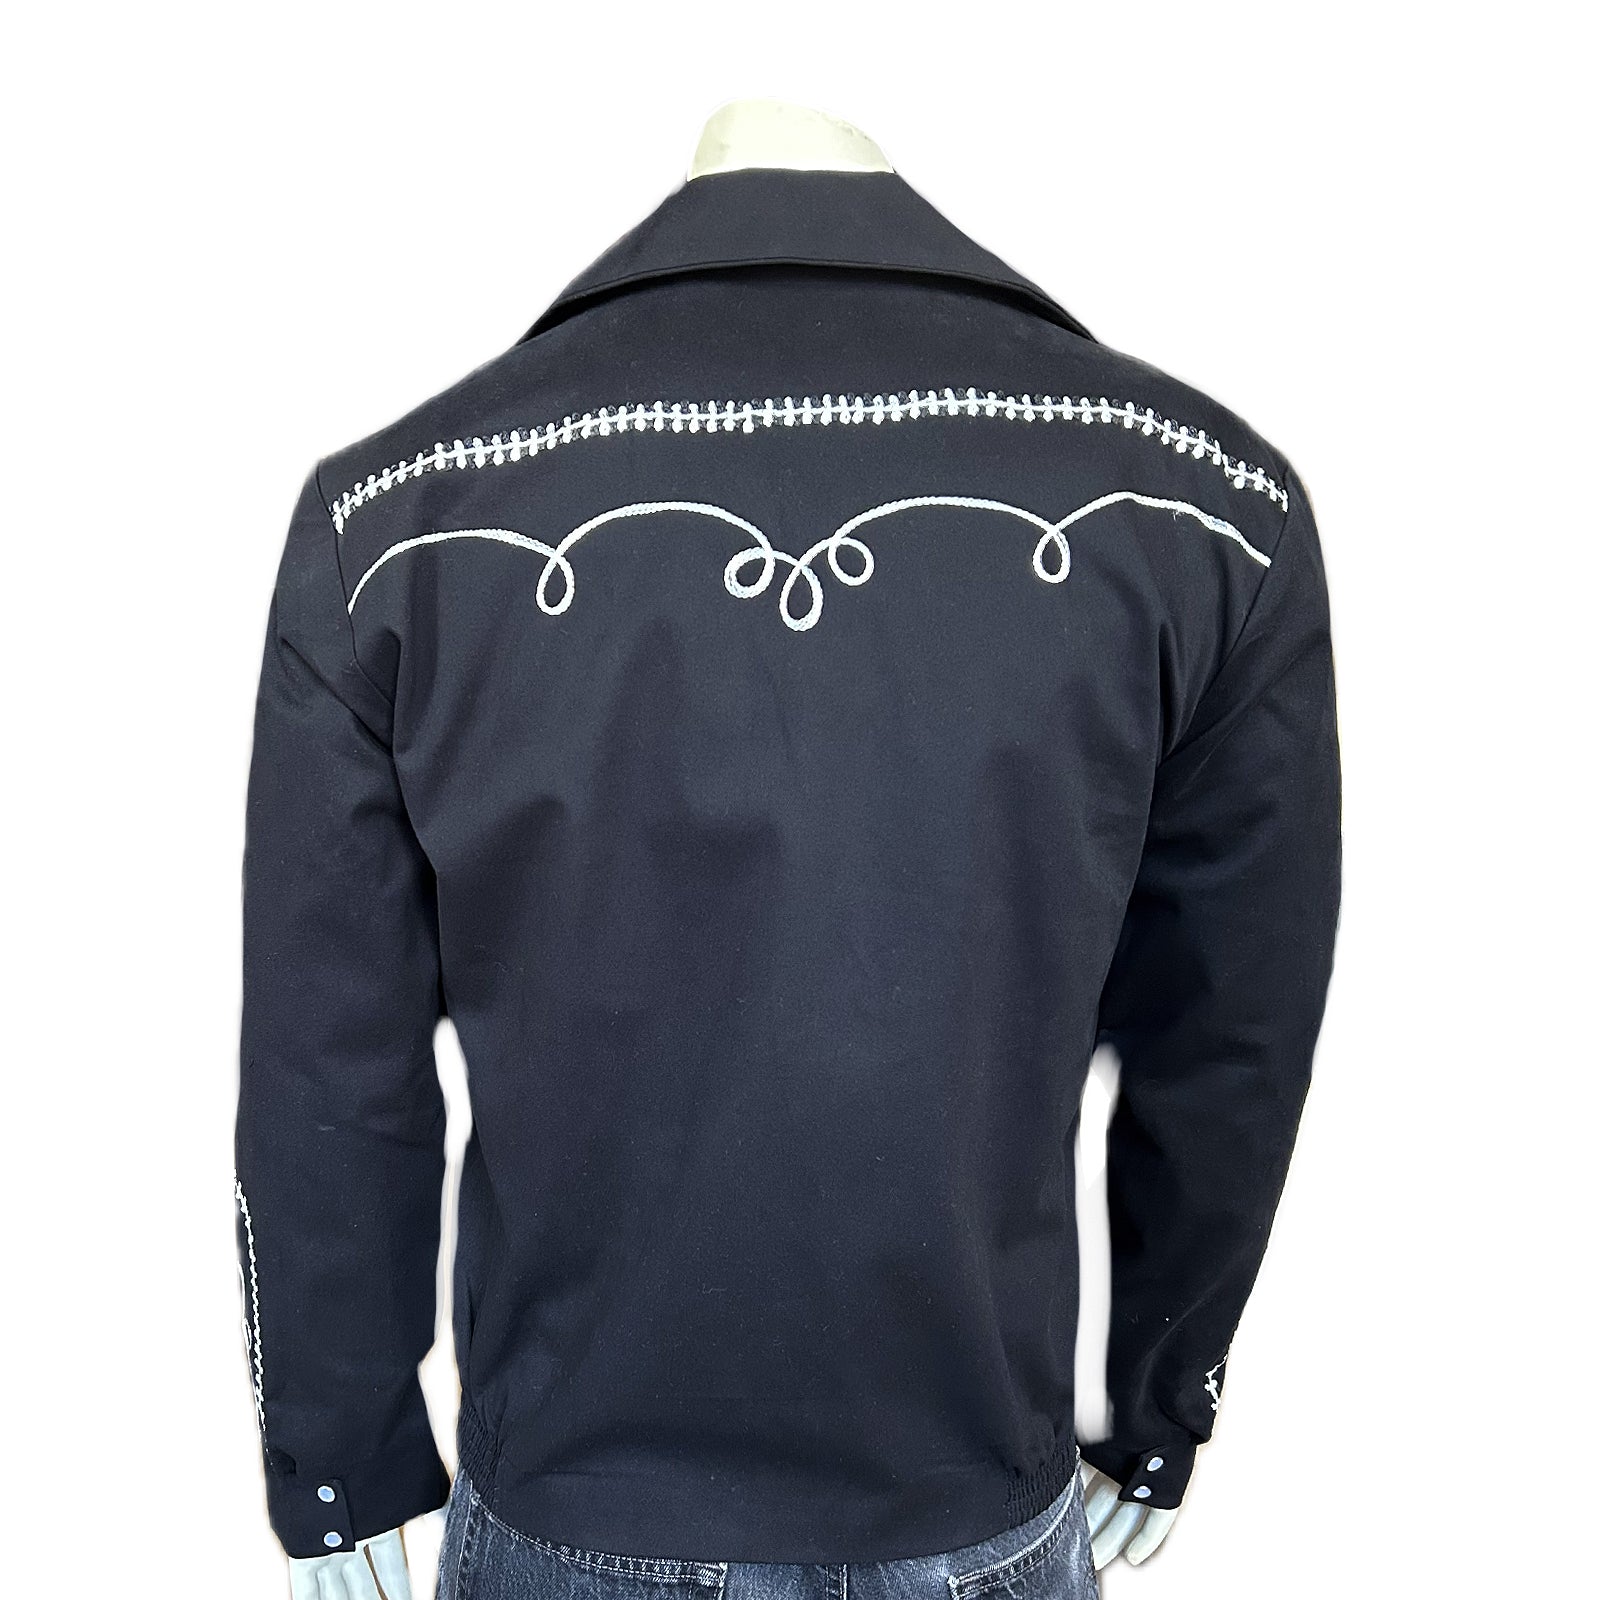 Men's Vintage Western Bolero Jacket with White Rope Embroidery | Western  jacket, Western shirts, Vintage men